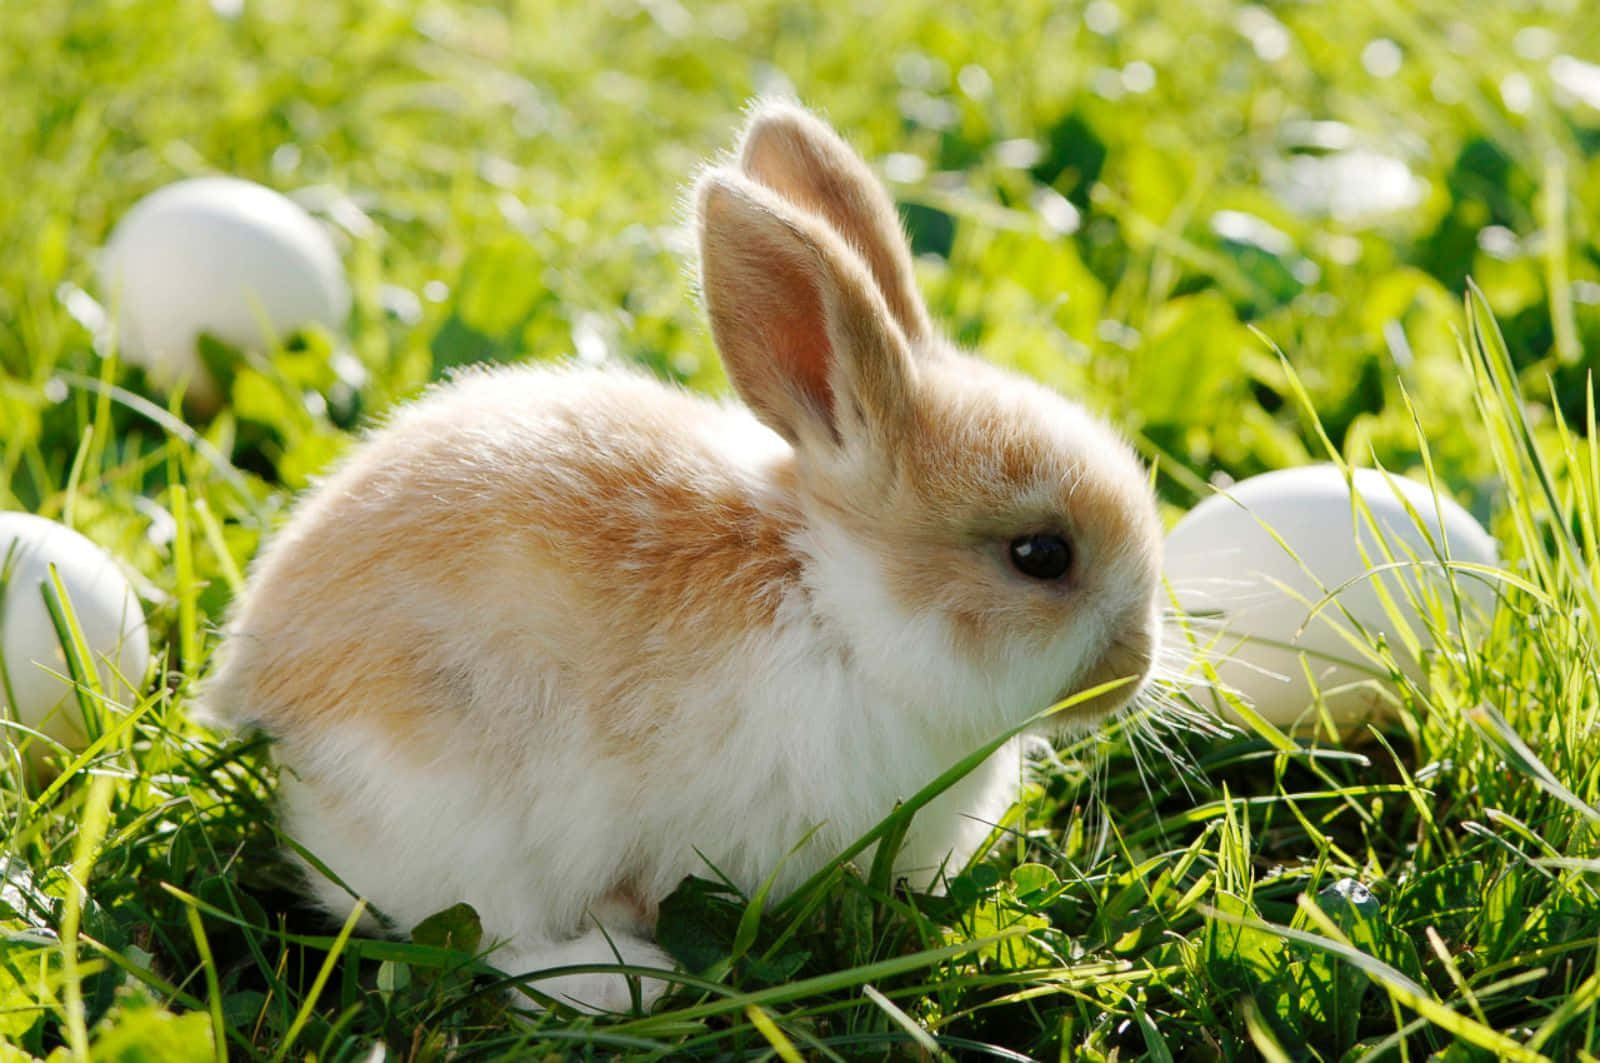 Adorable Bunny Posing in Open Field